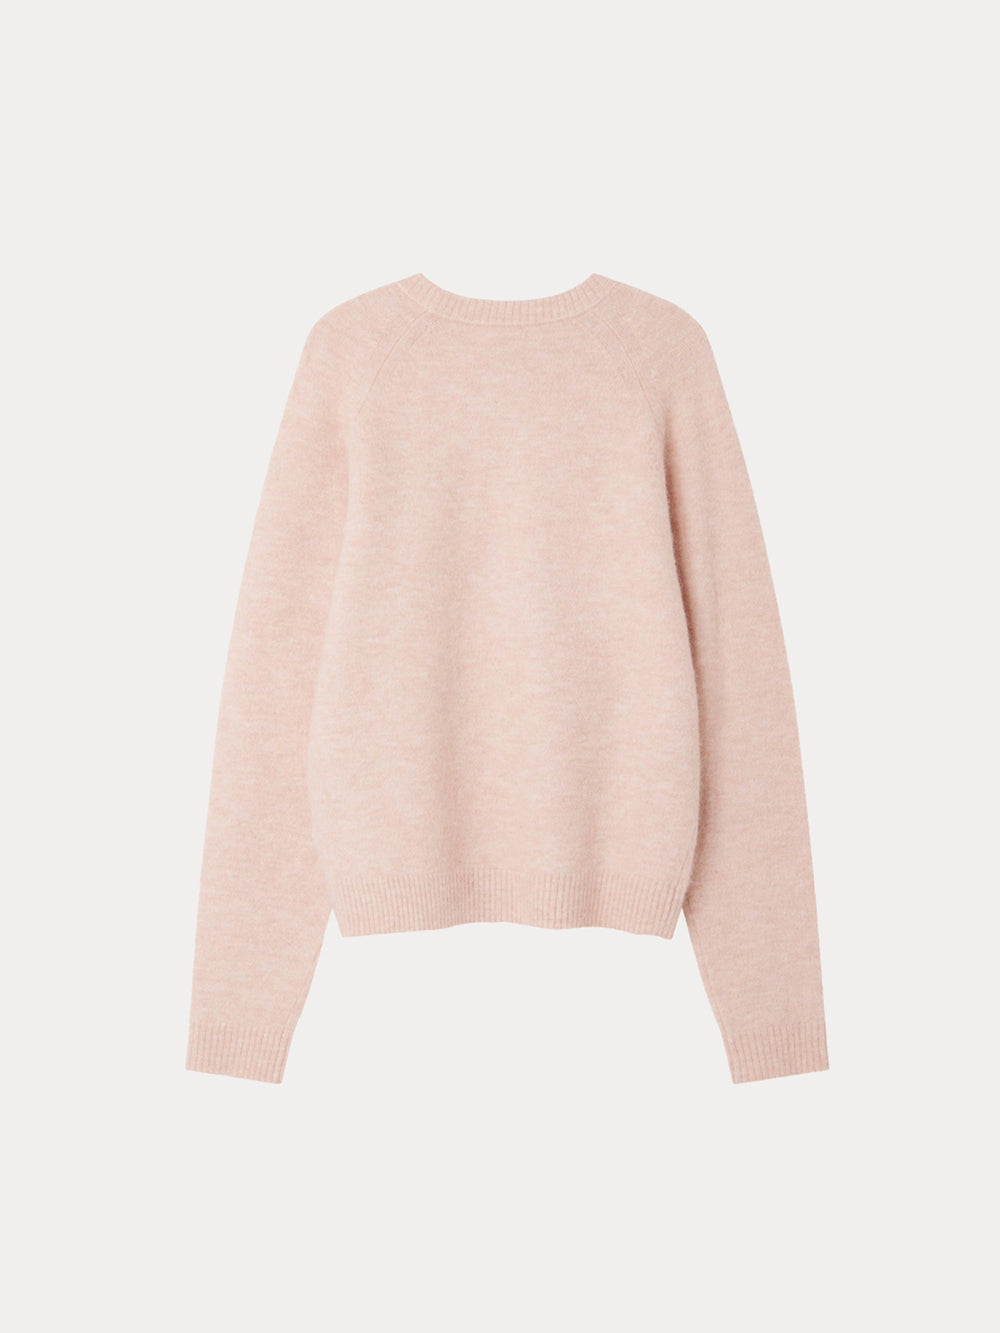 Aspen Sweater pale pink